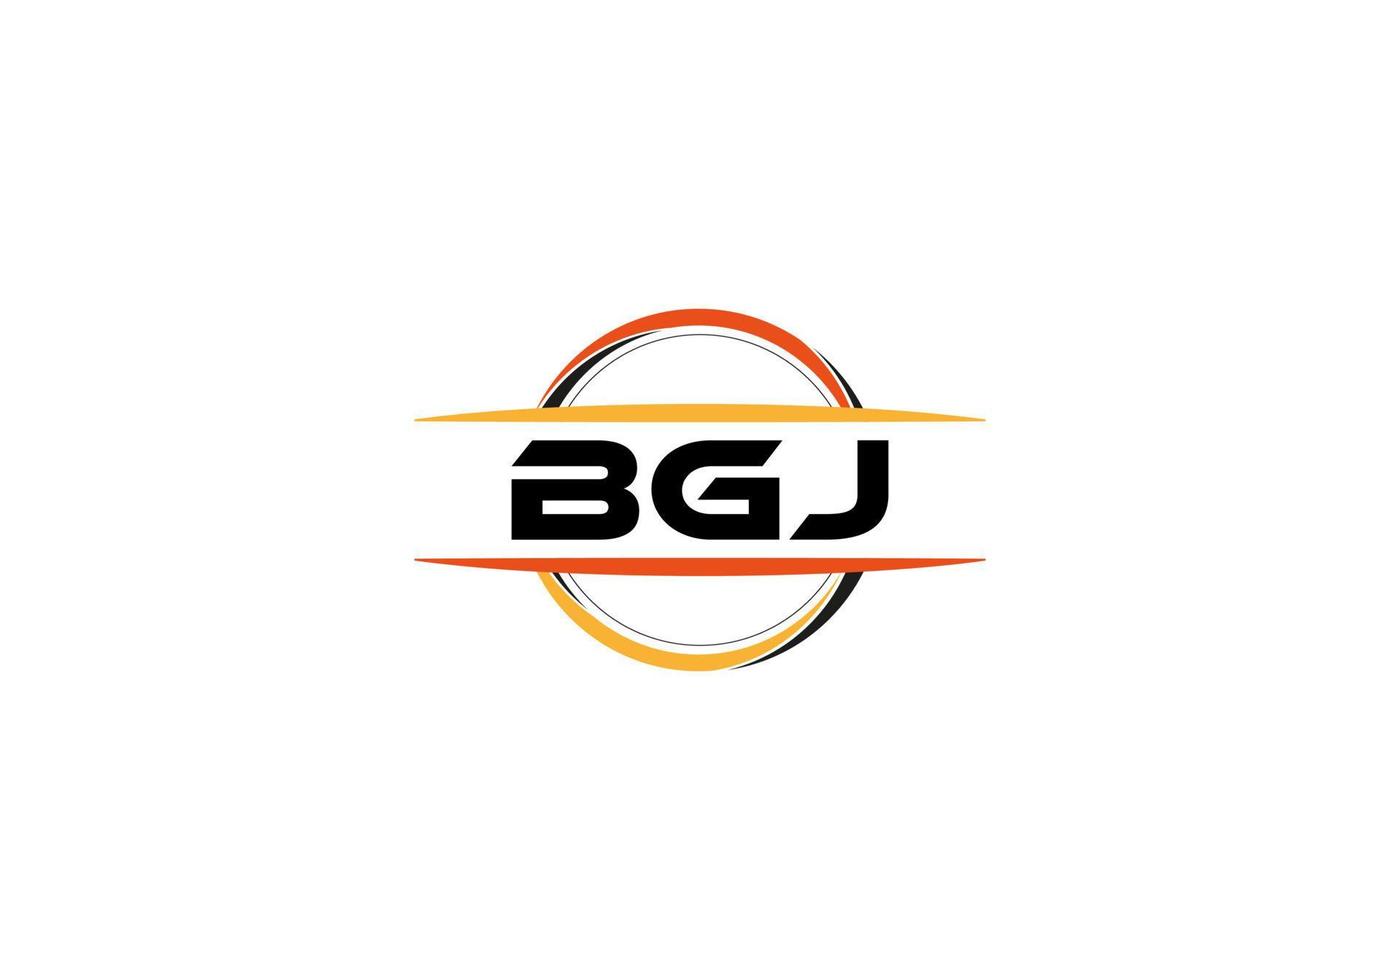 bgj lettre royalties ellipse forme logo. bgj brosse art logo. bgj logo pour une entreprise, entreprise, et commercial utiliser. vecteur